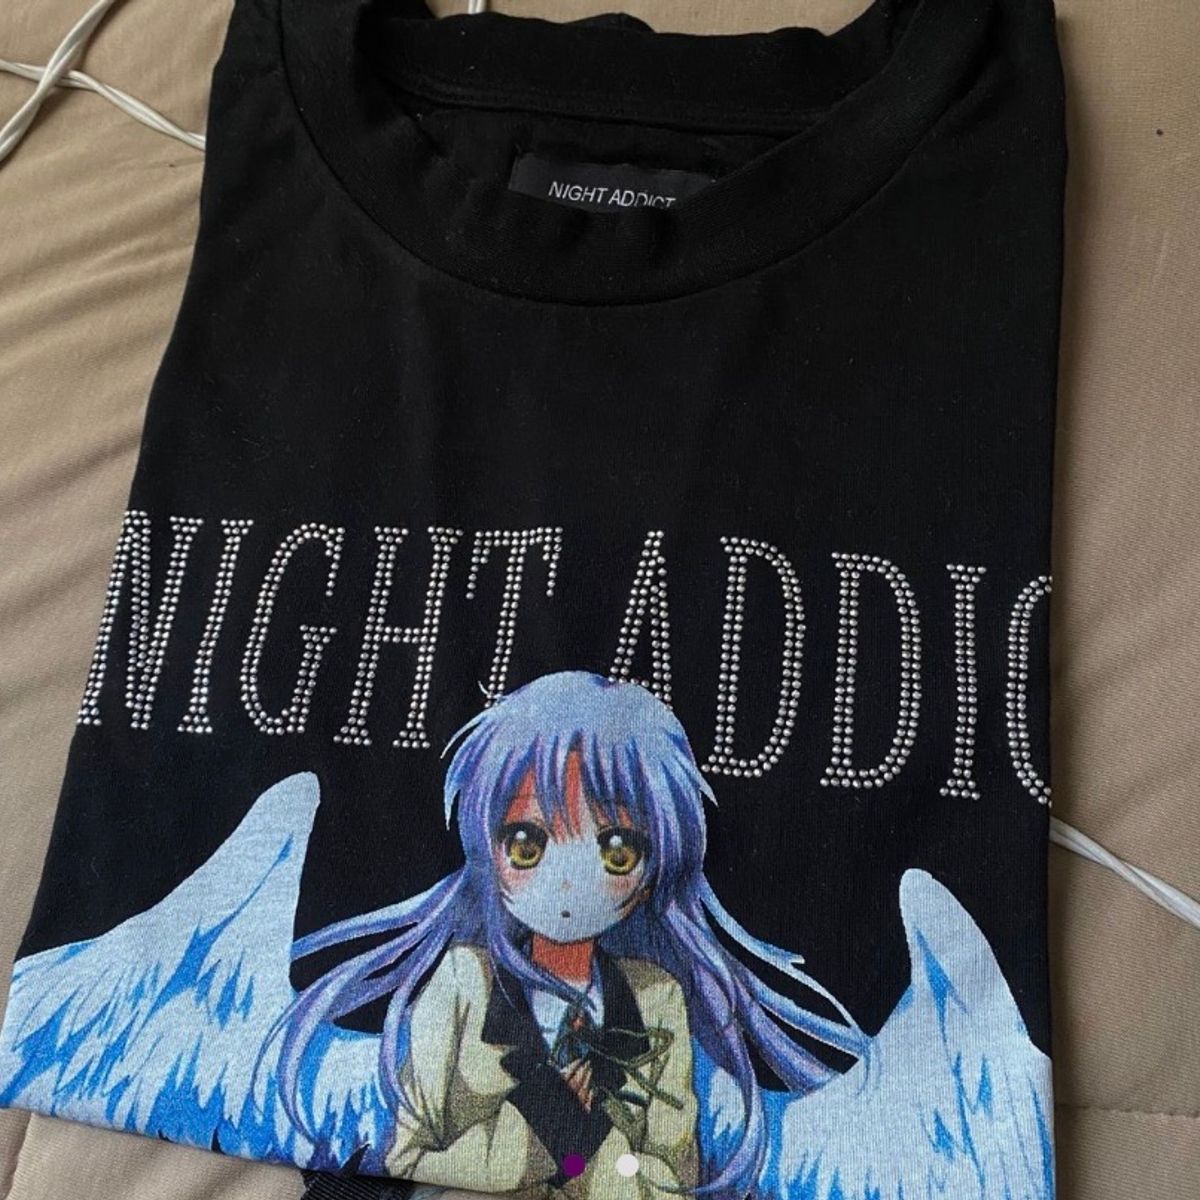 Camiseta Design Anime Preta, Camiseta Masculina Night Addict Usado  89374825